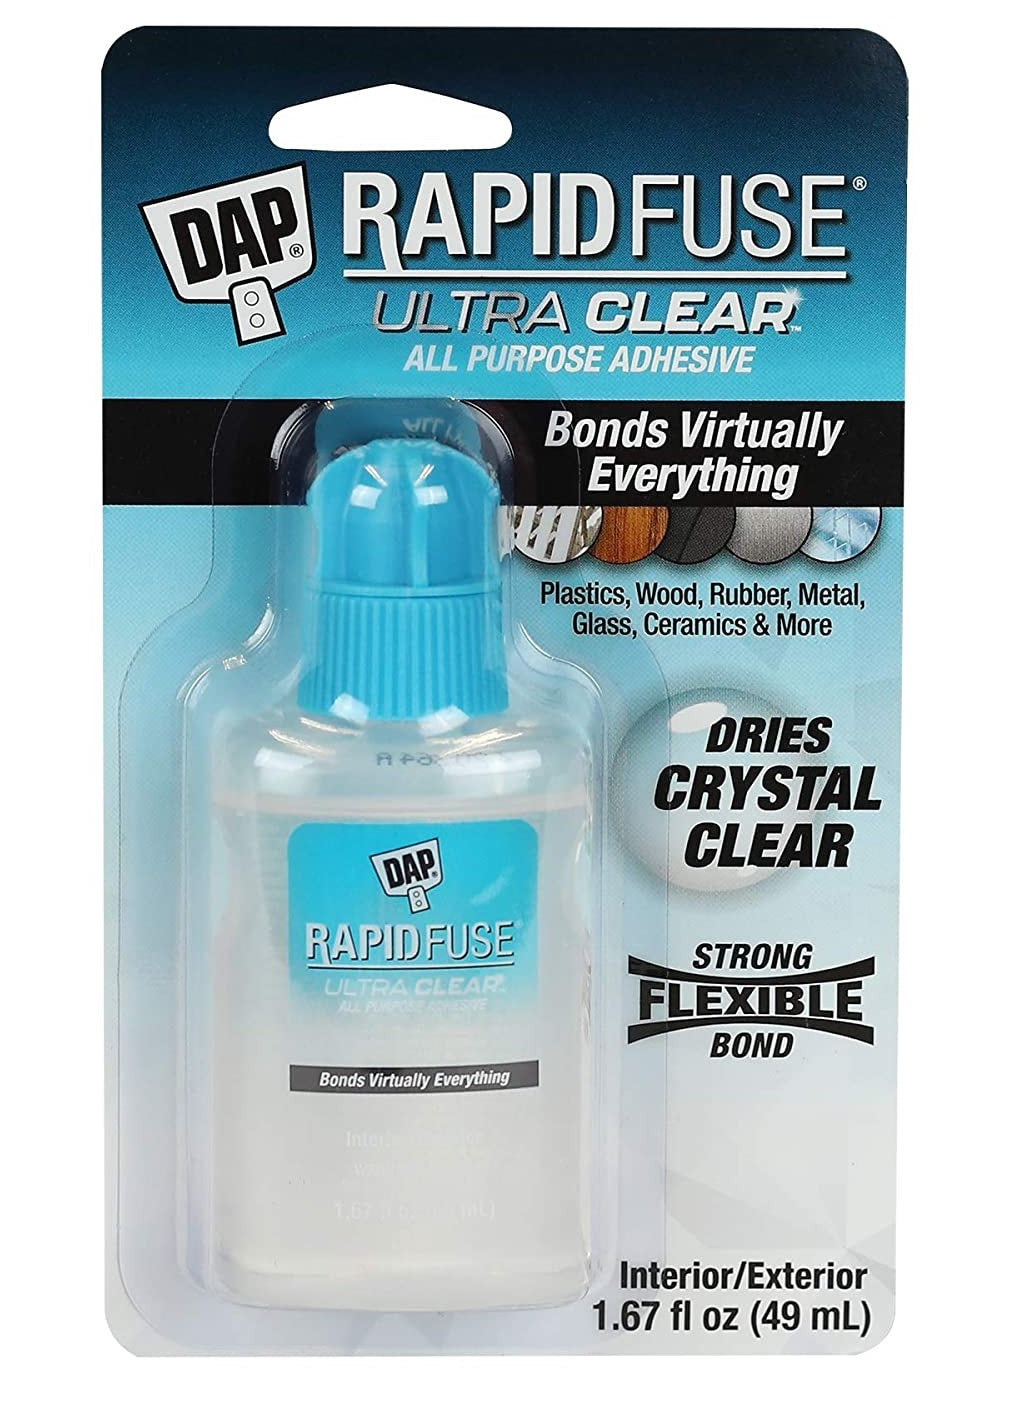 DAP 7079800180 RapidFuse Ultra Clear All Purpose Adhesive, 1.67 Oz